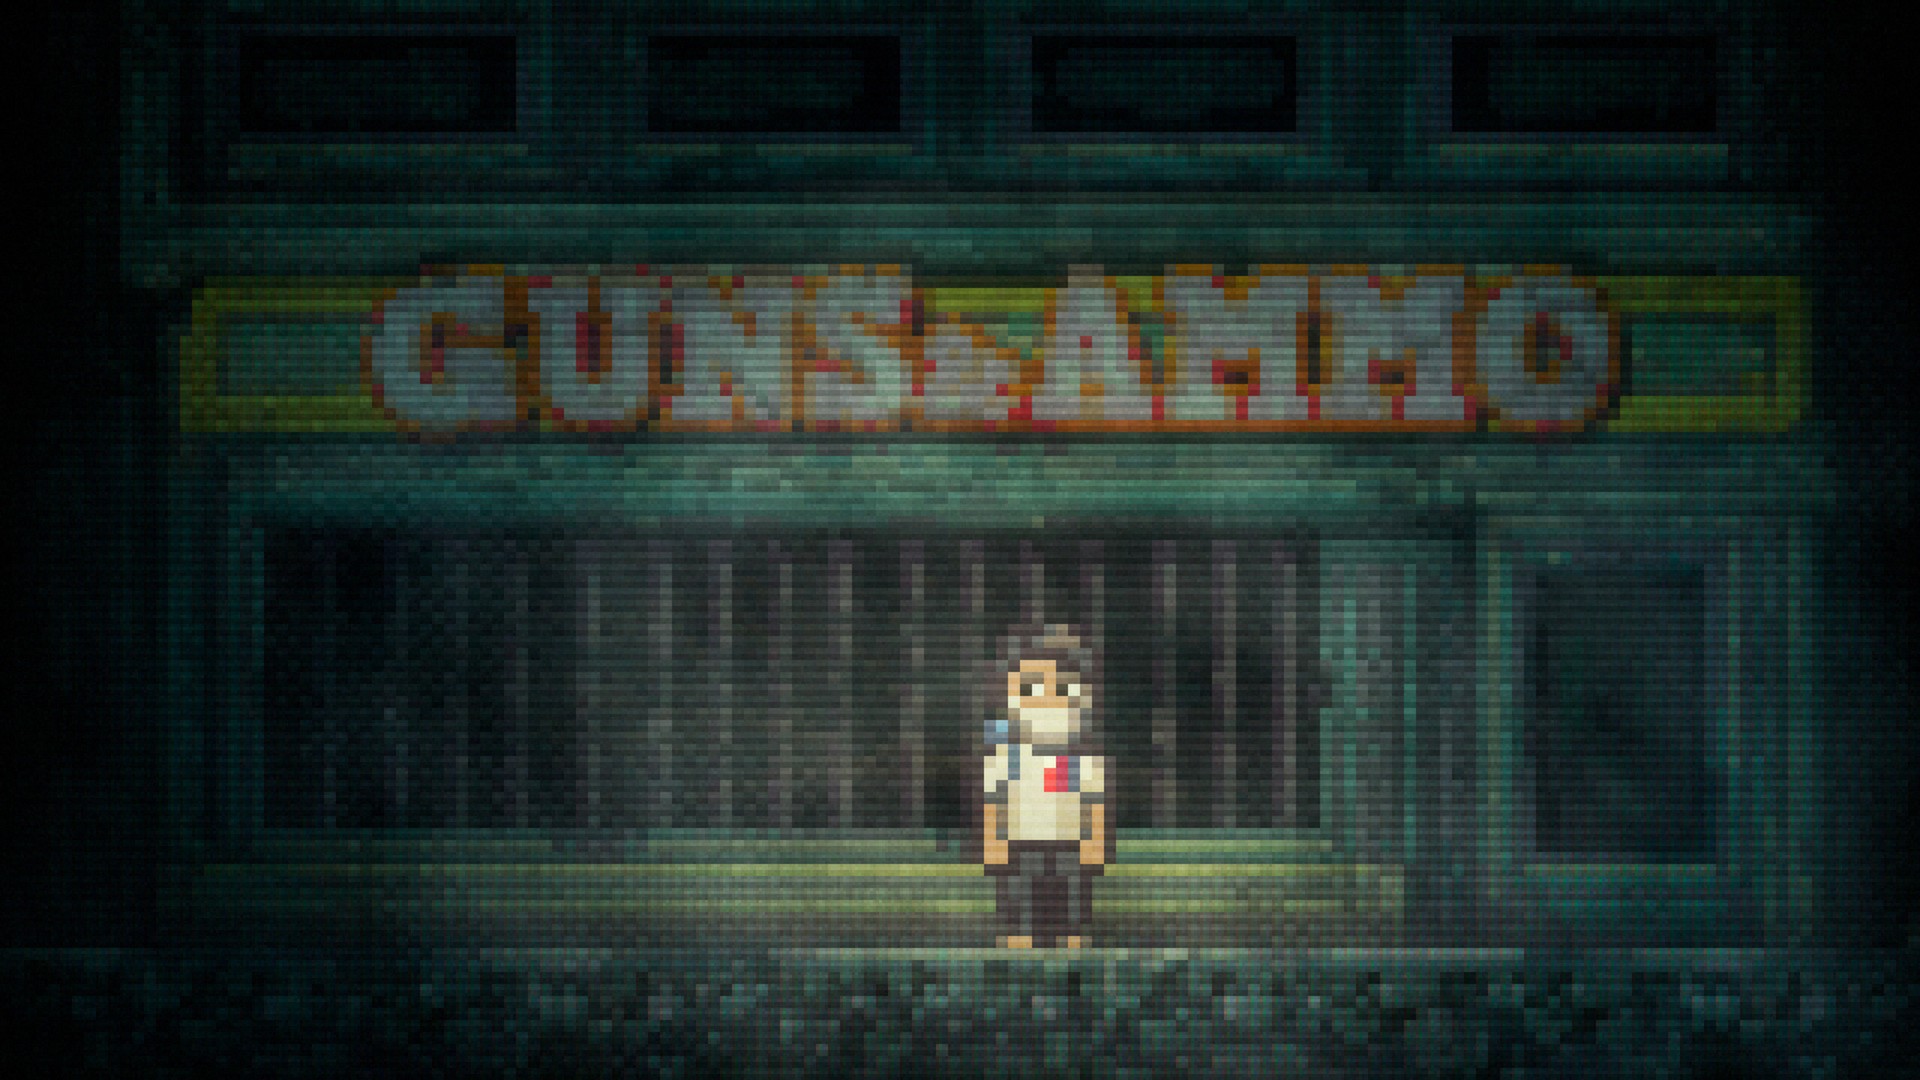 Lone Survivor: The Director's Cut su Steam